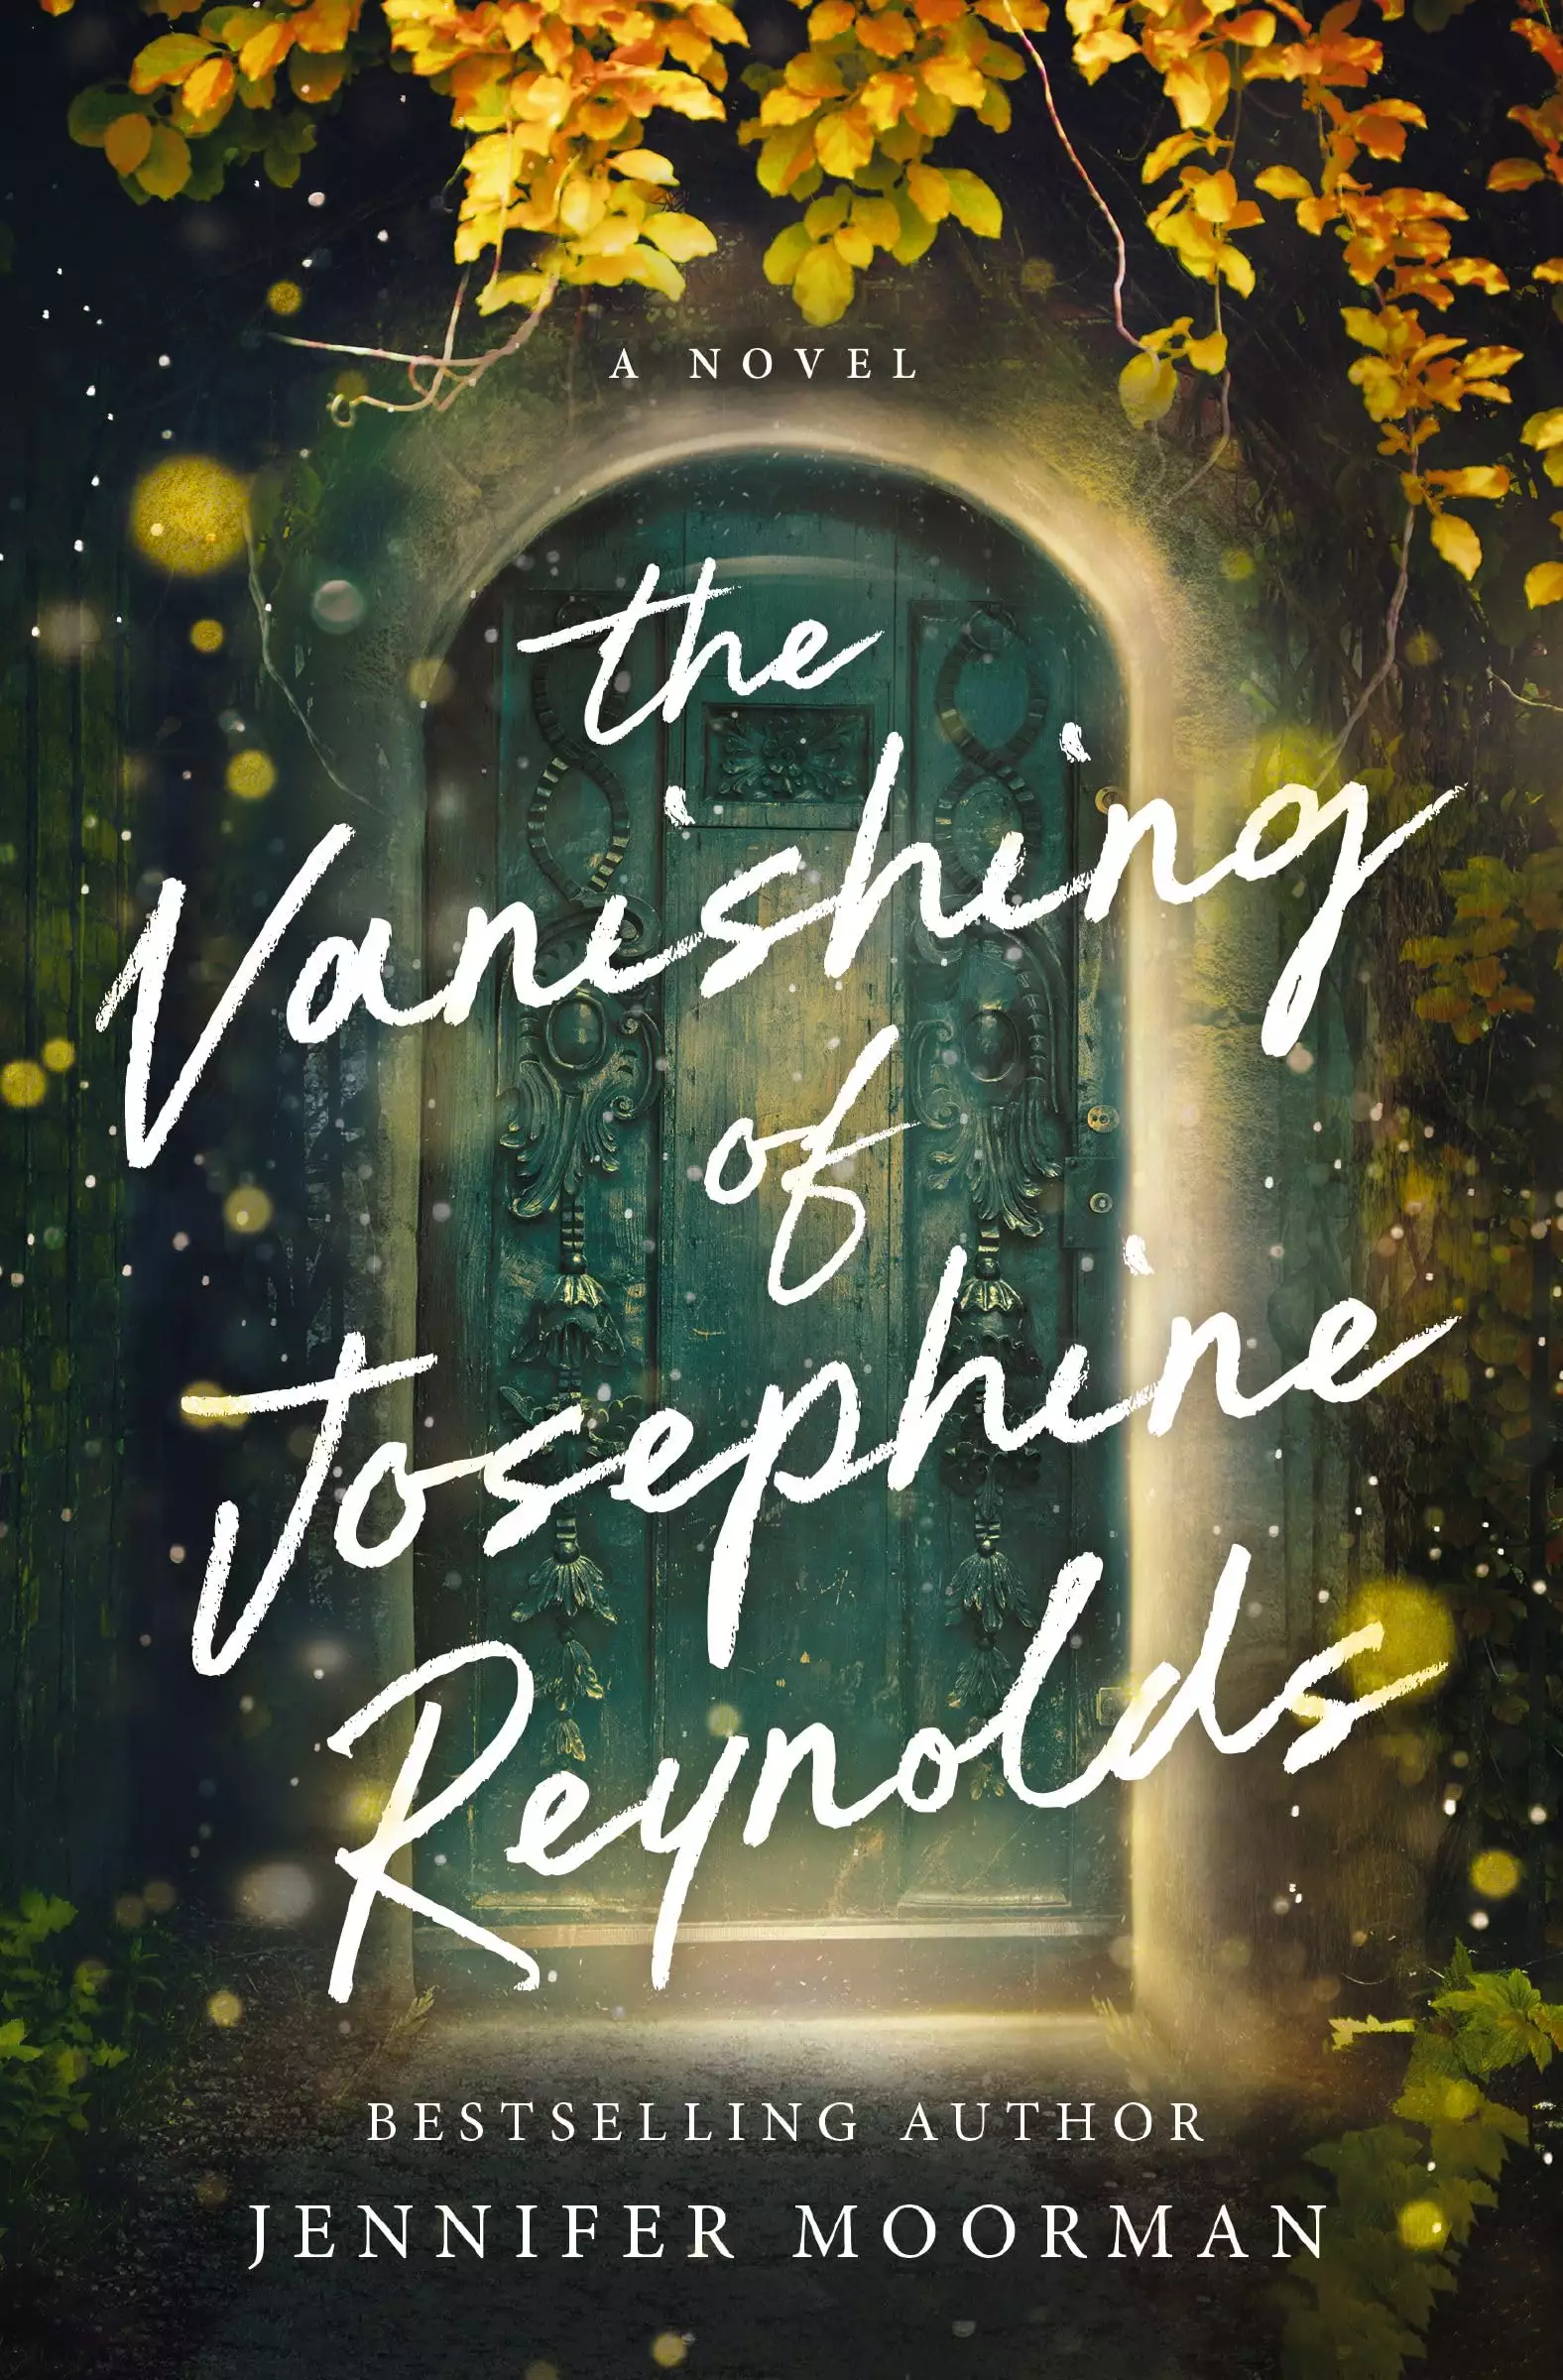 The Vanishing of Josephine Reynolds